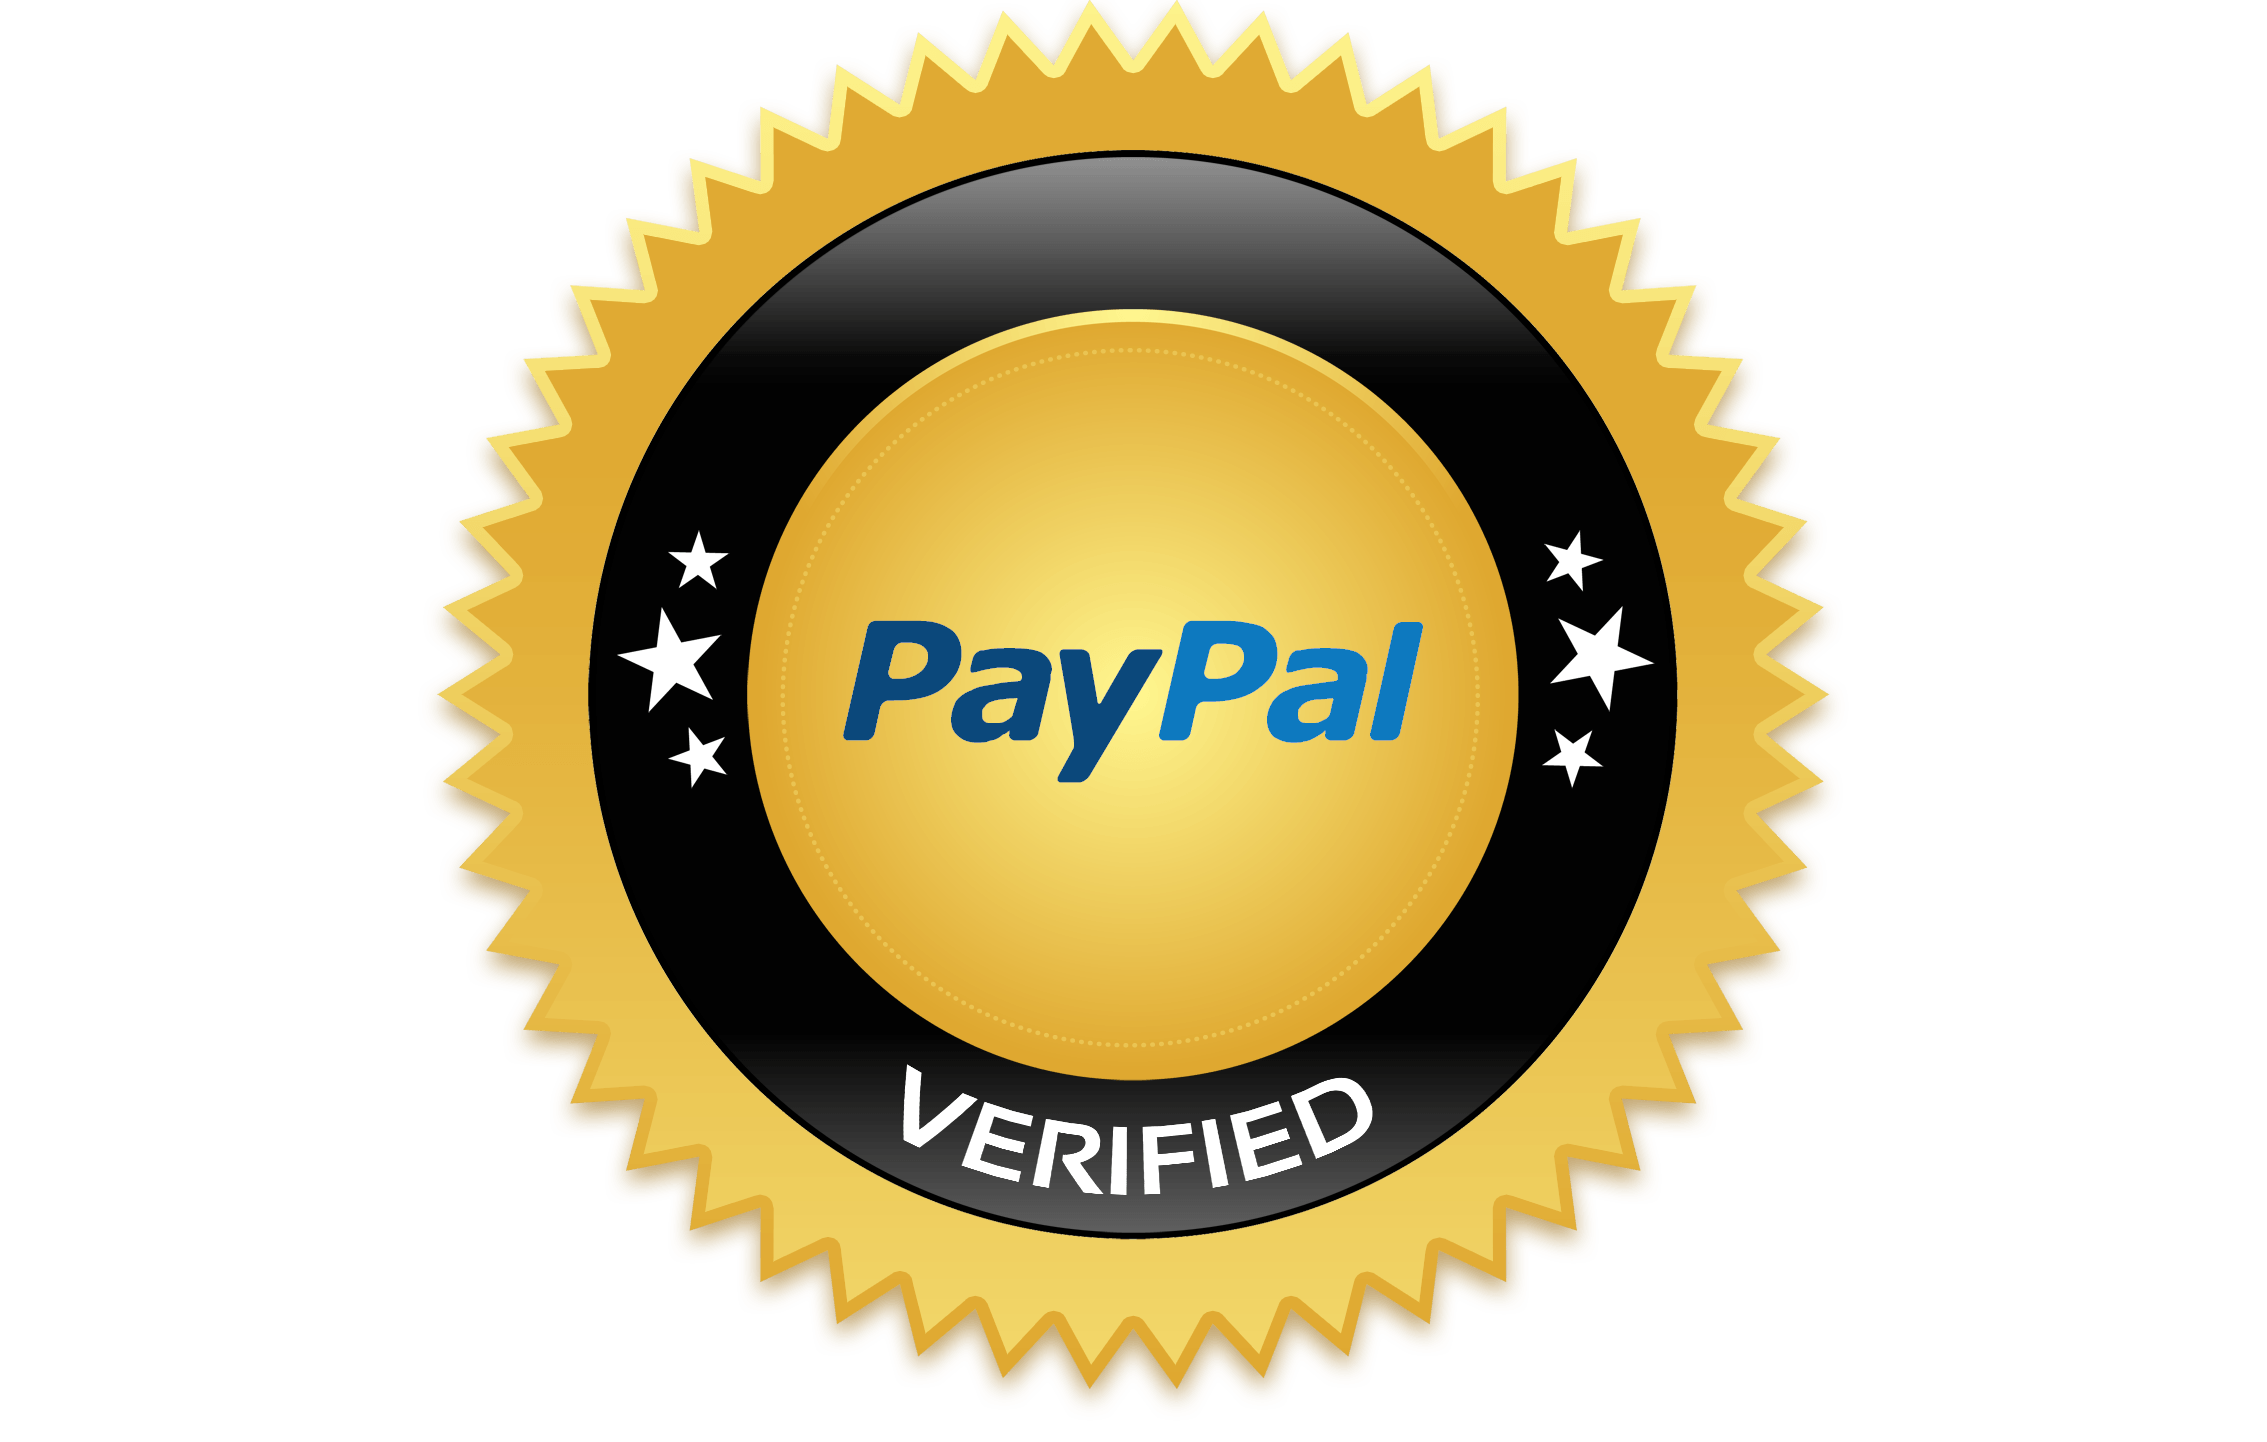 Paypal Verified Logo, Paypal Icon, Symbols, Emblem Png - Free ...